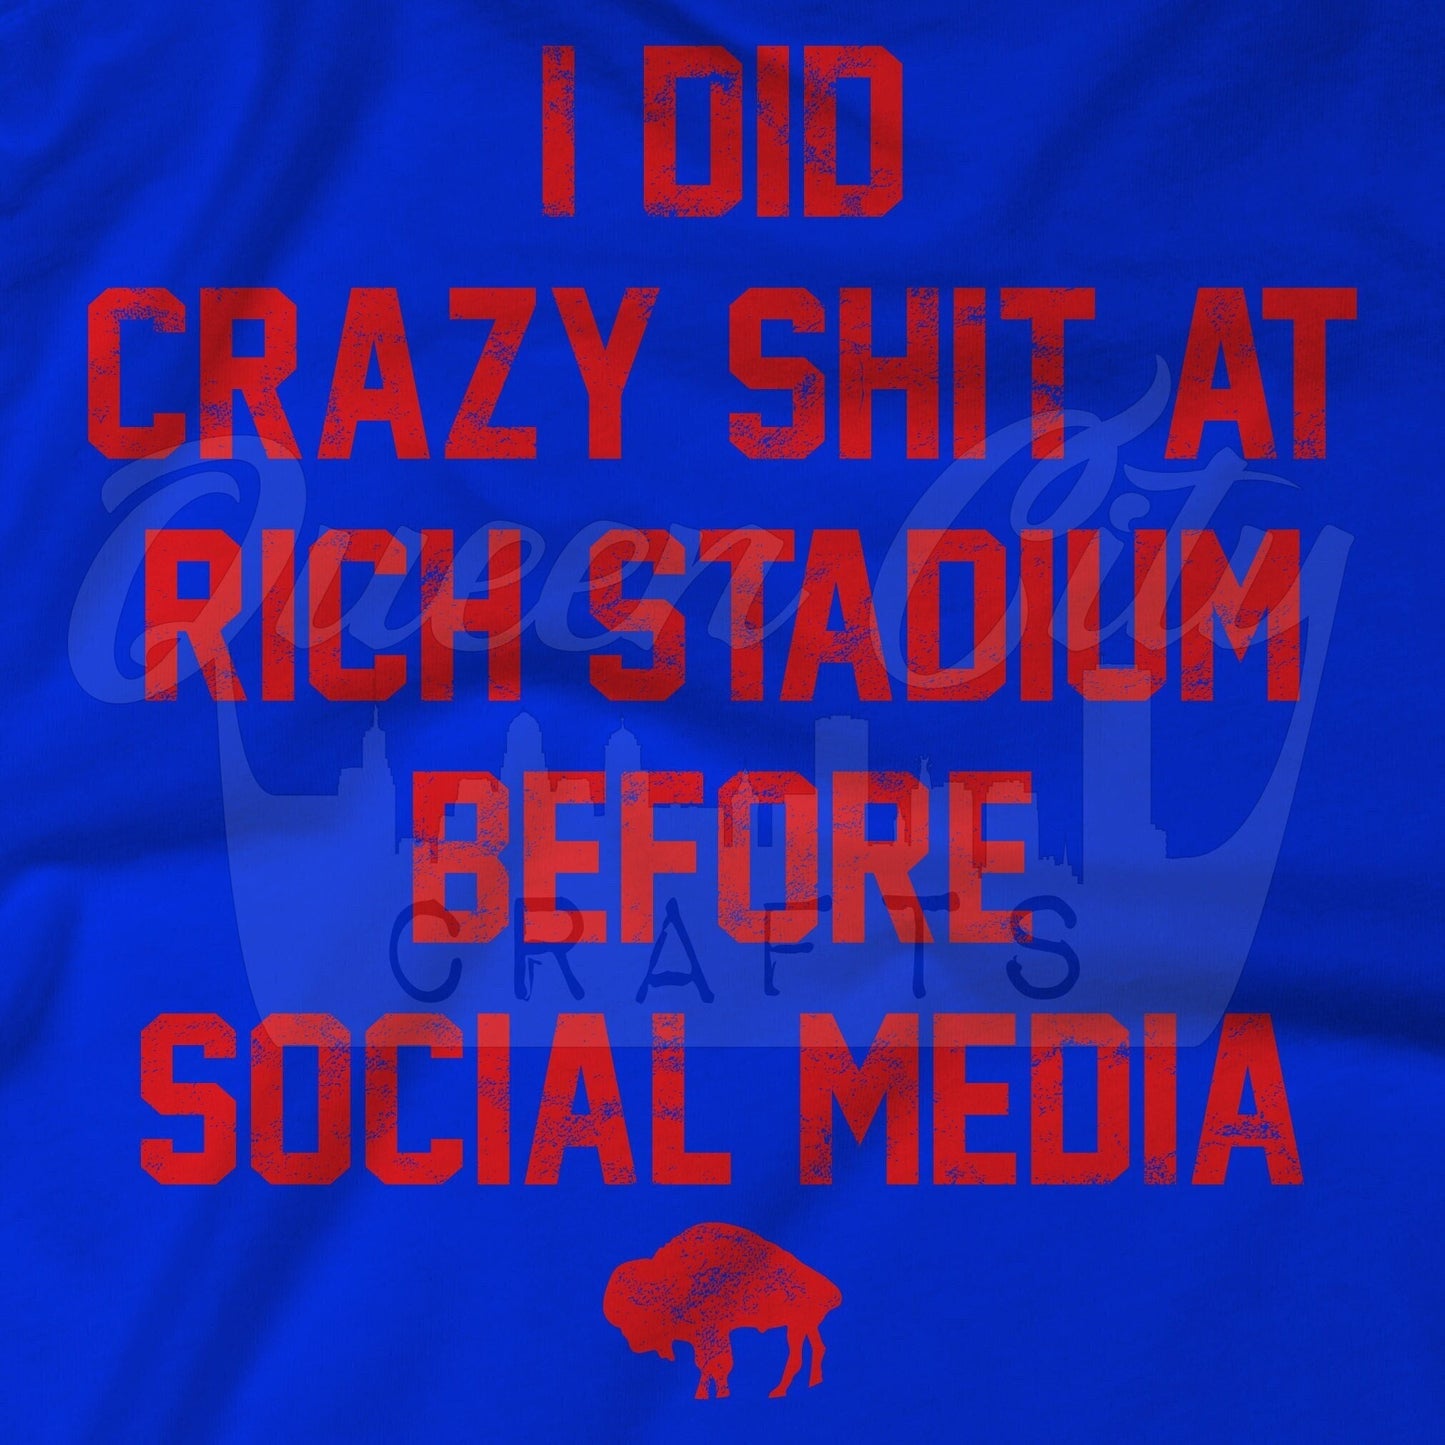 Buffalo Stadium Crazy Tailgate Before Social Media T-Shirt